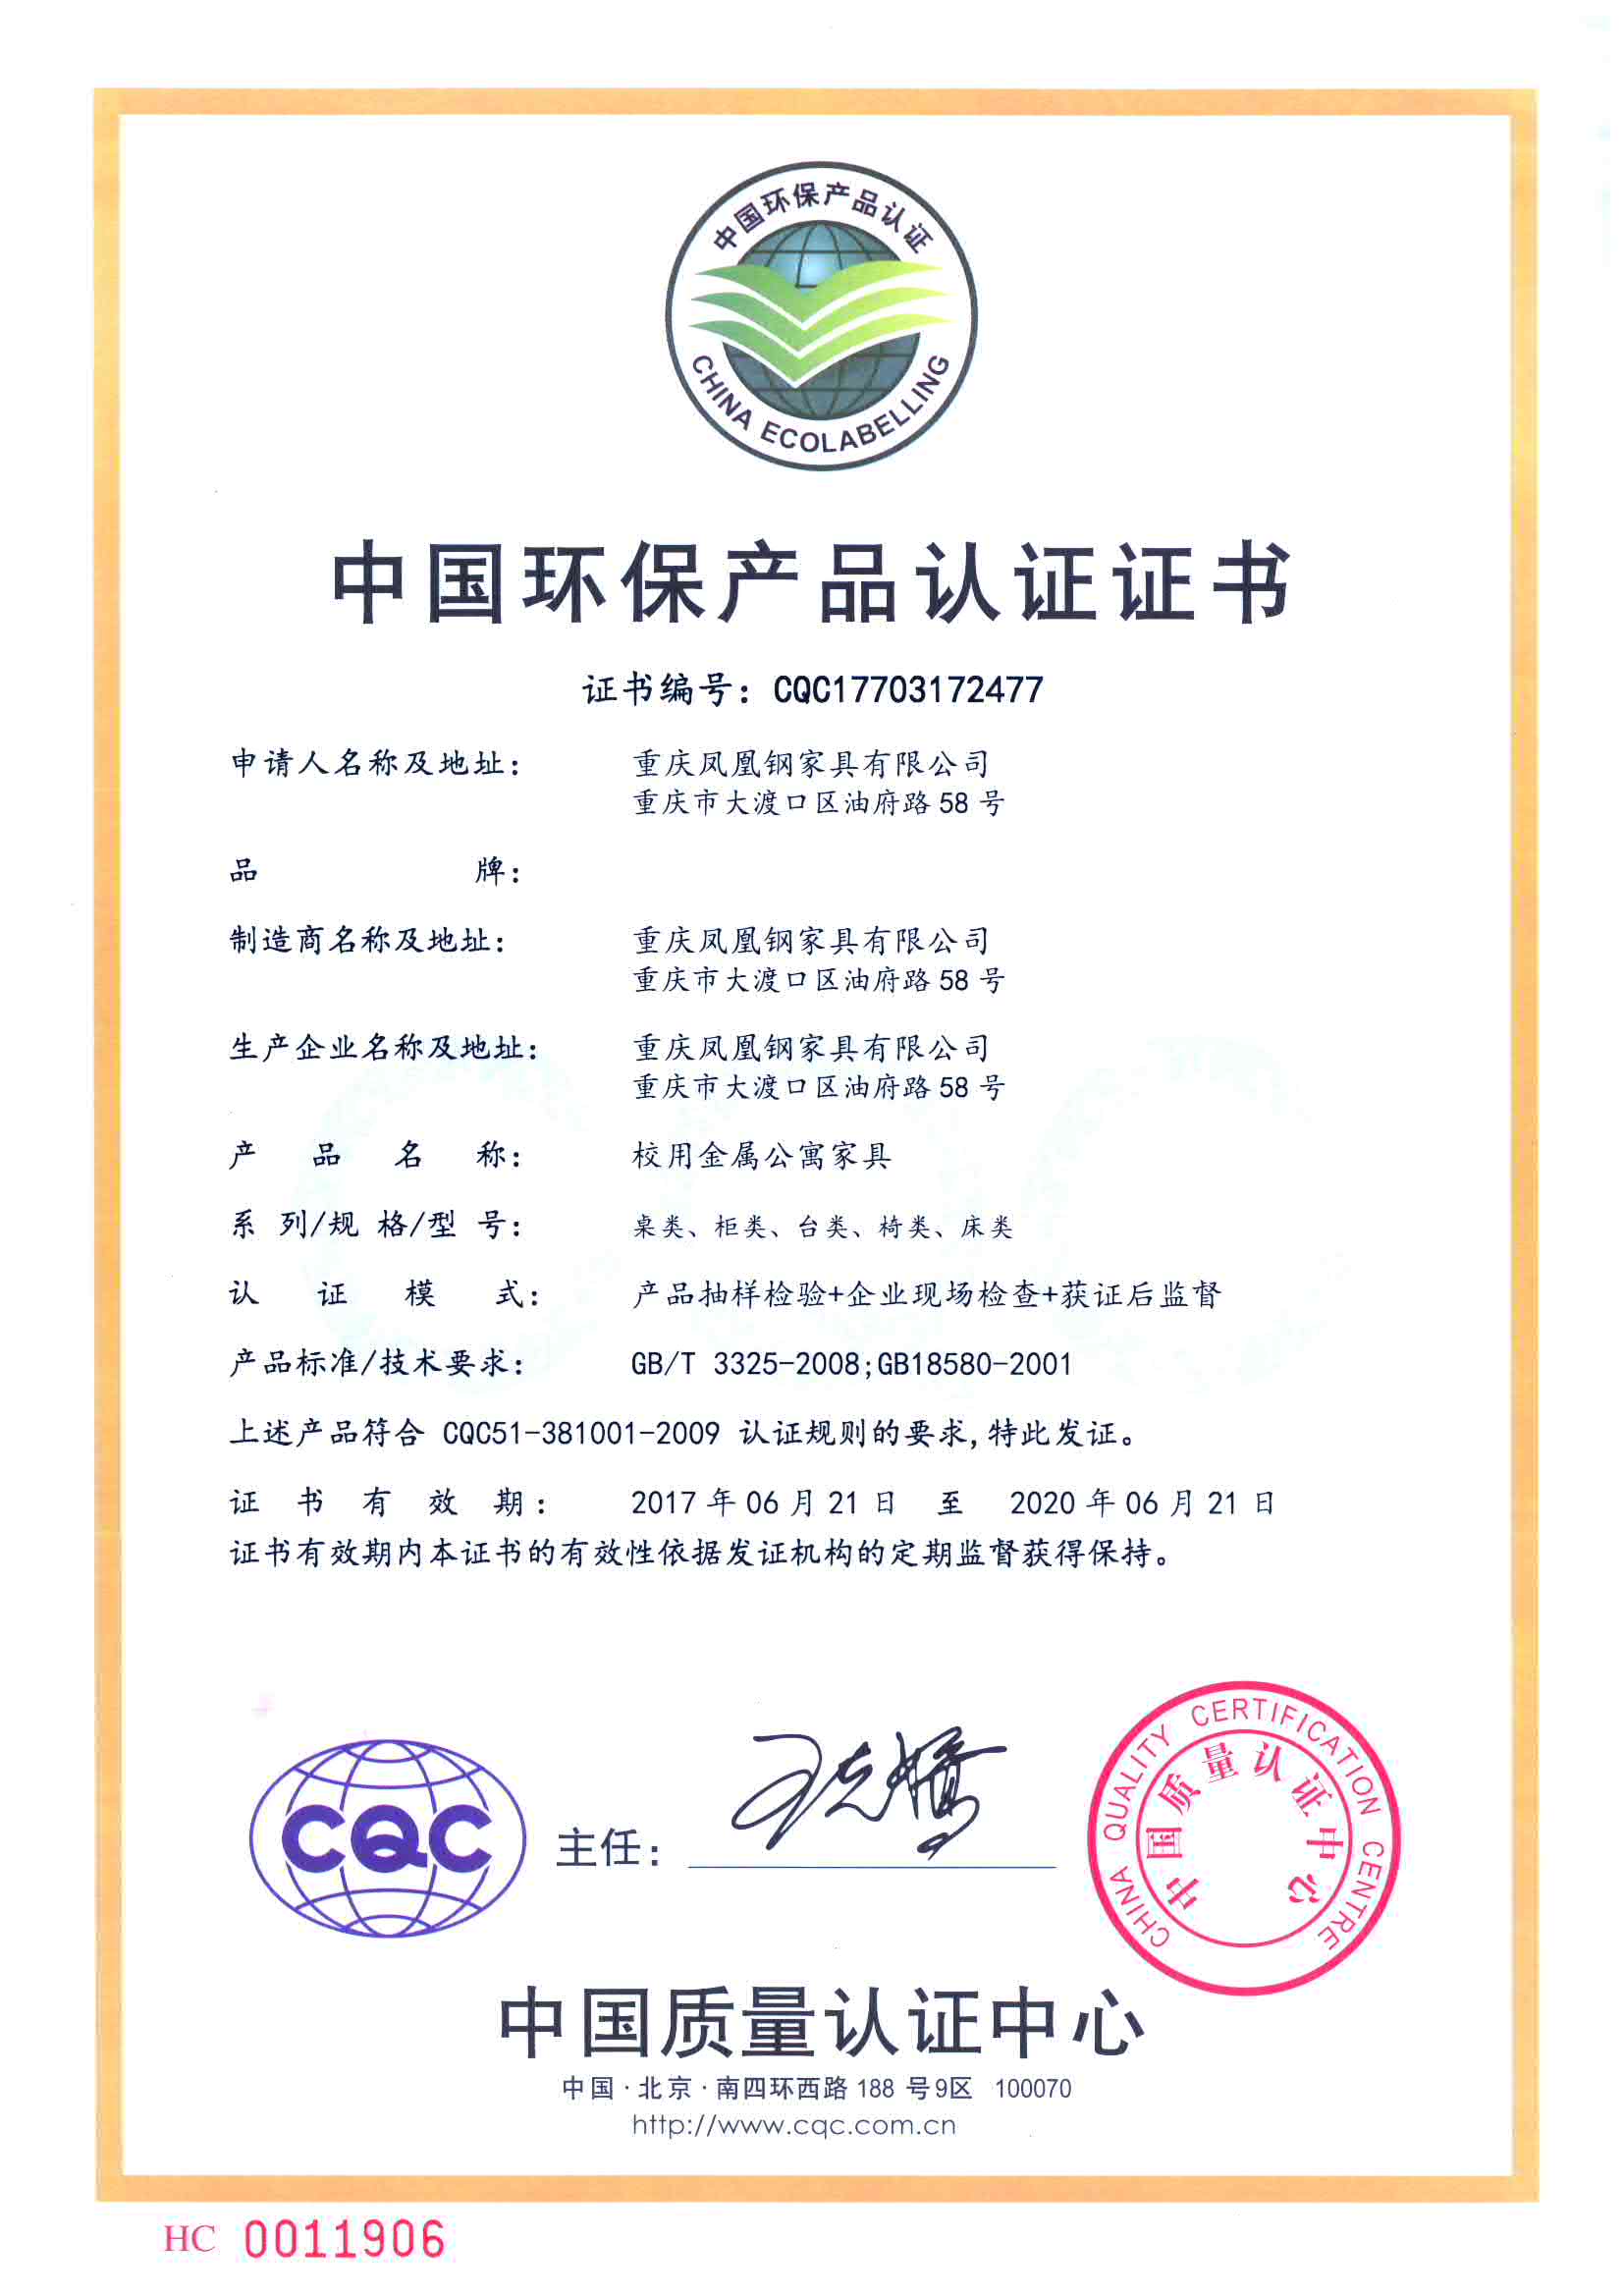 China Environmental Product Certification